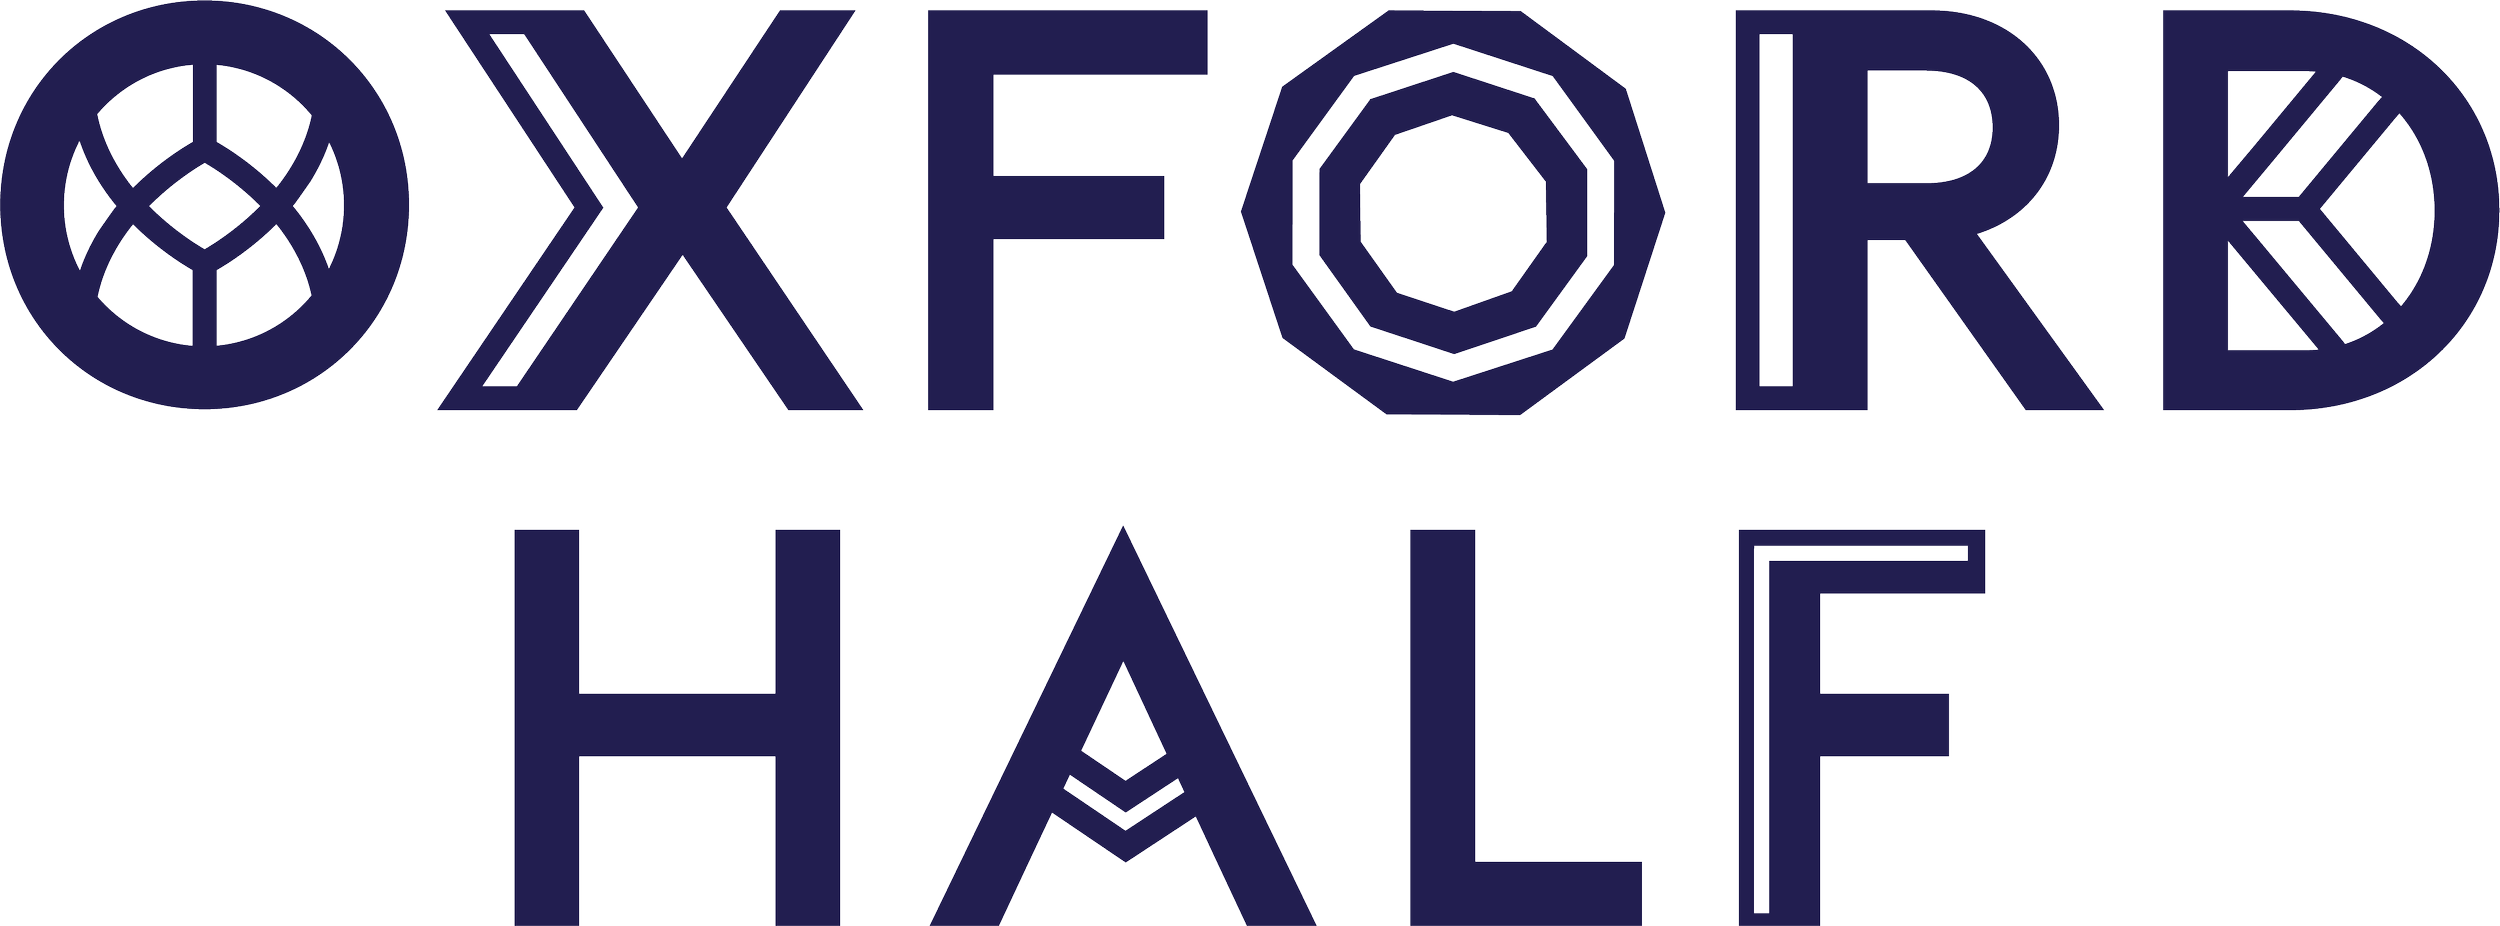 Oxford Half Logo.png